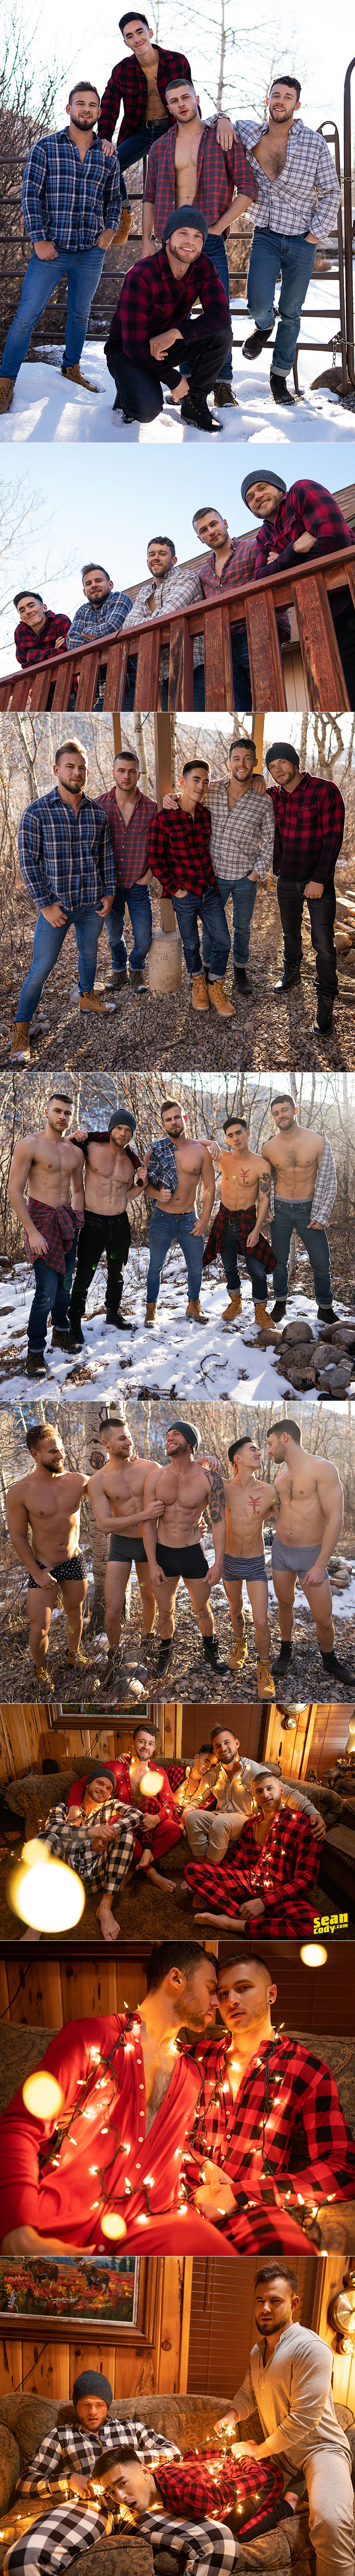 Sean Cody: Sean, Josh, Justin, Devy and Cody Seiya's bareback orgy in "The Cabin, Episode 4"